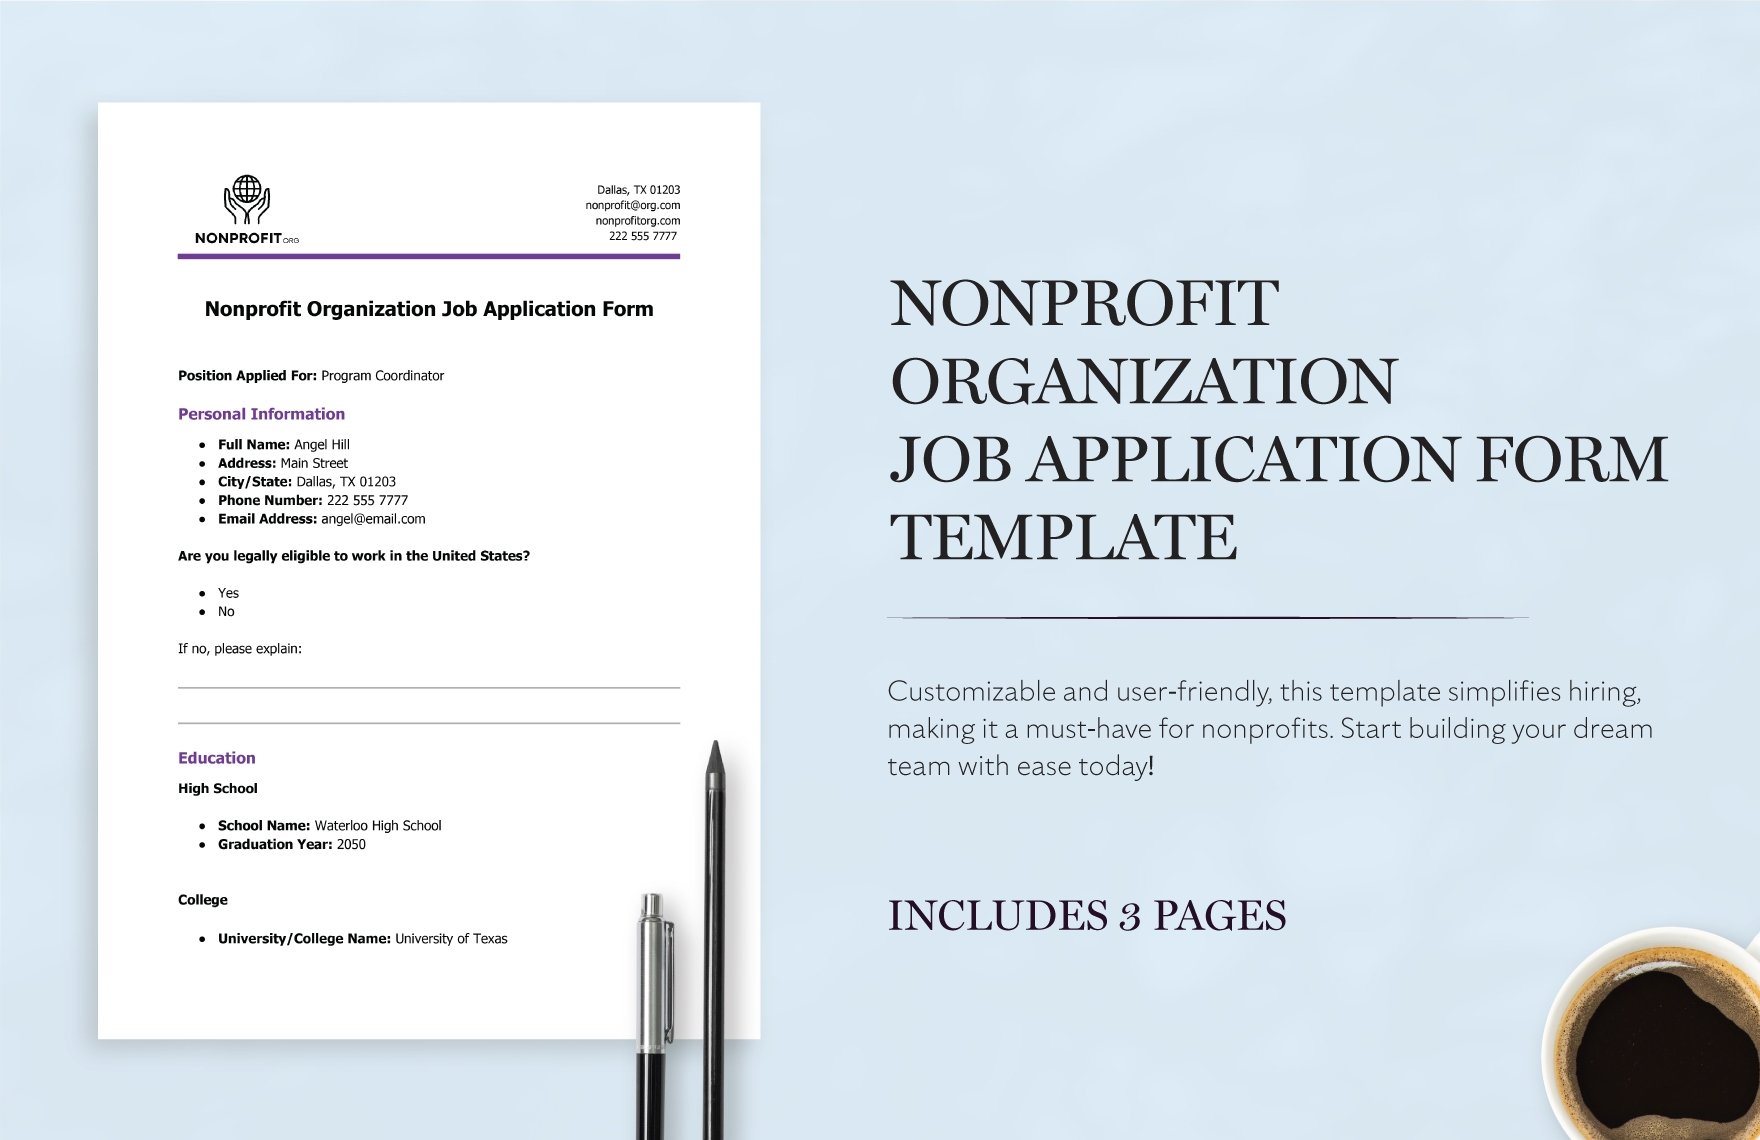 Nonprofit Organization Job Application Form Template